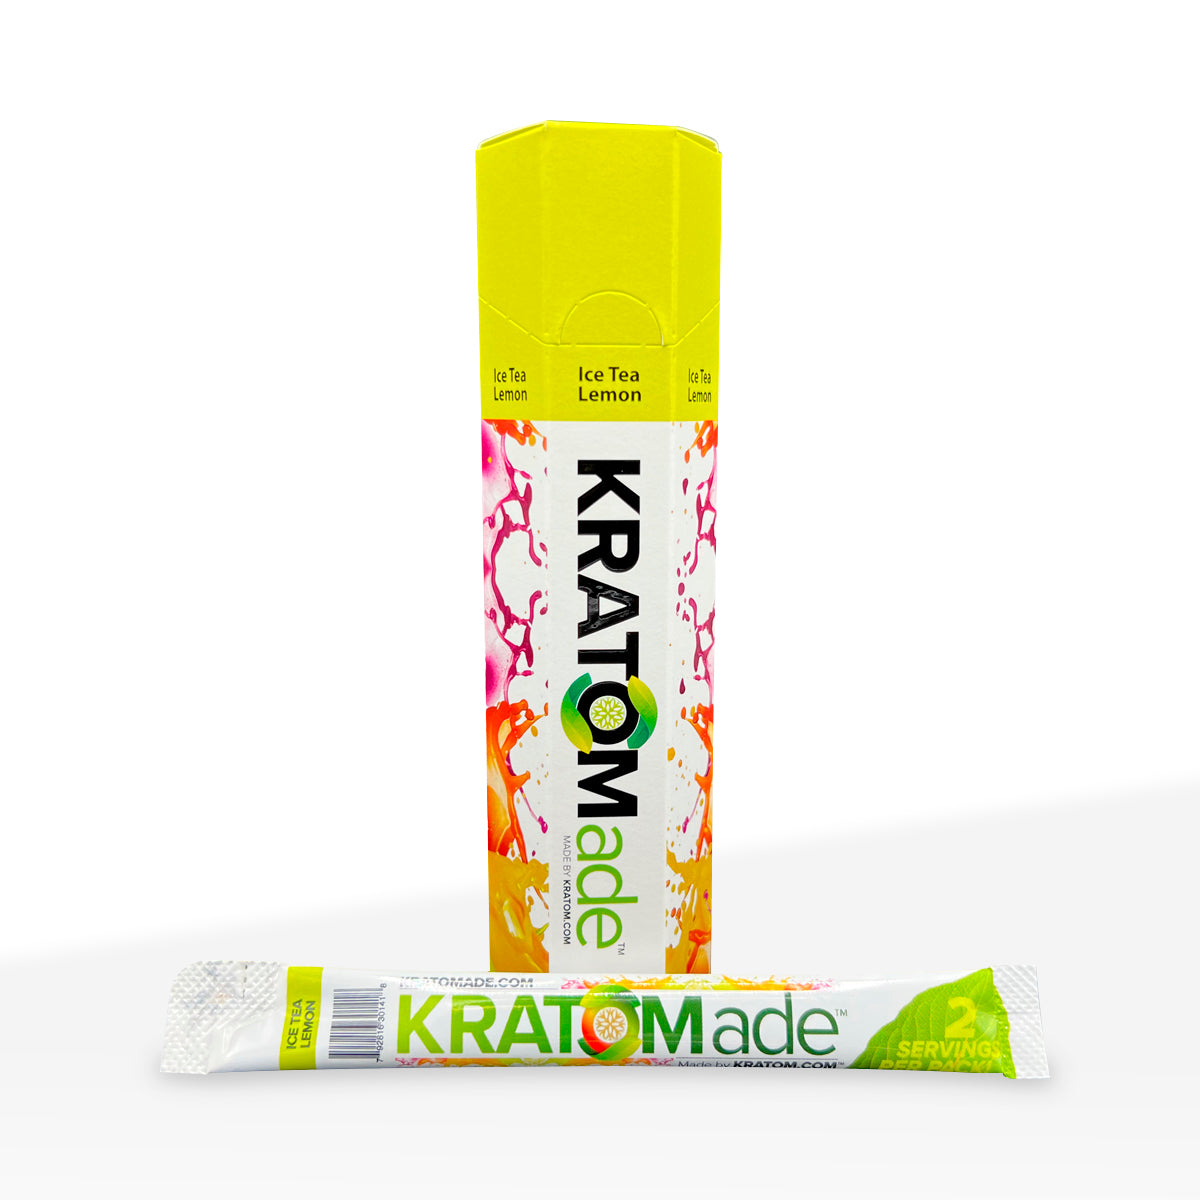 KratomADE Kratom 100mg Powder in Ice Tea Lemon